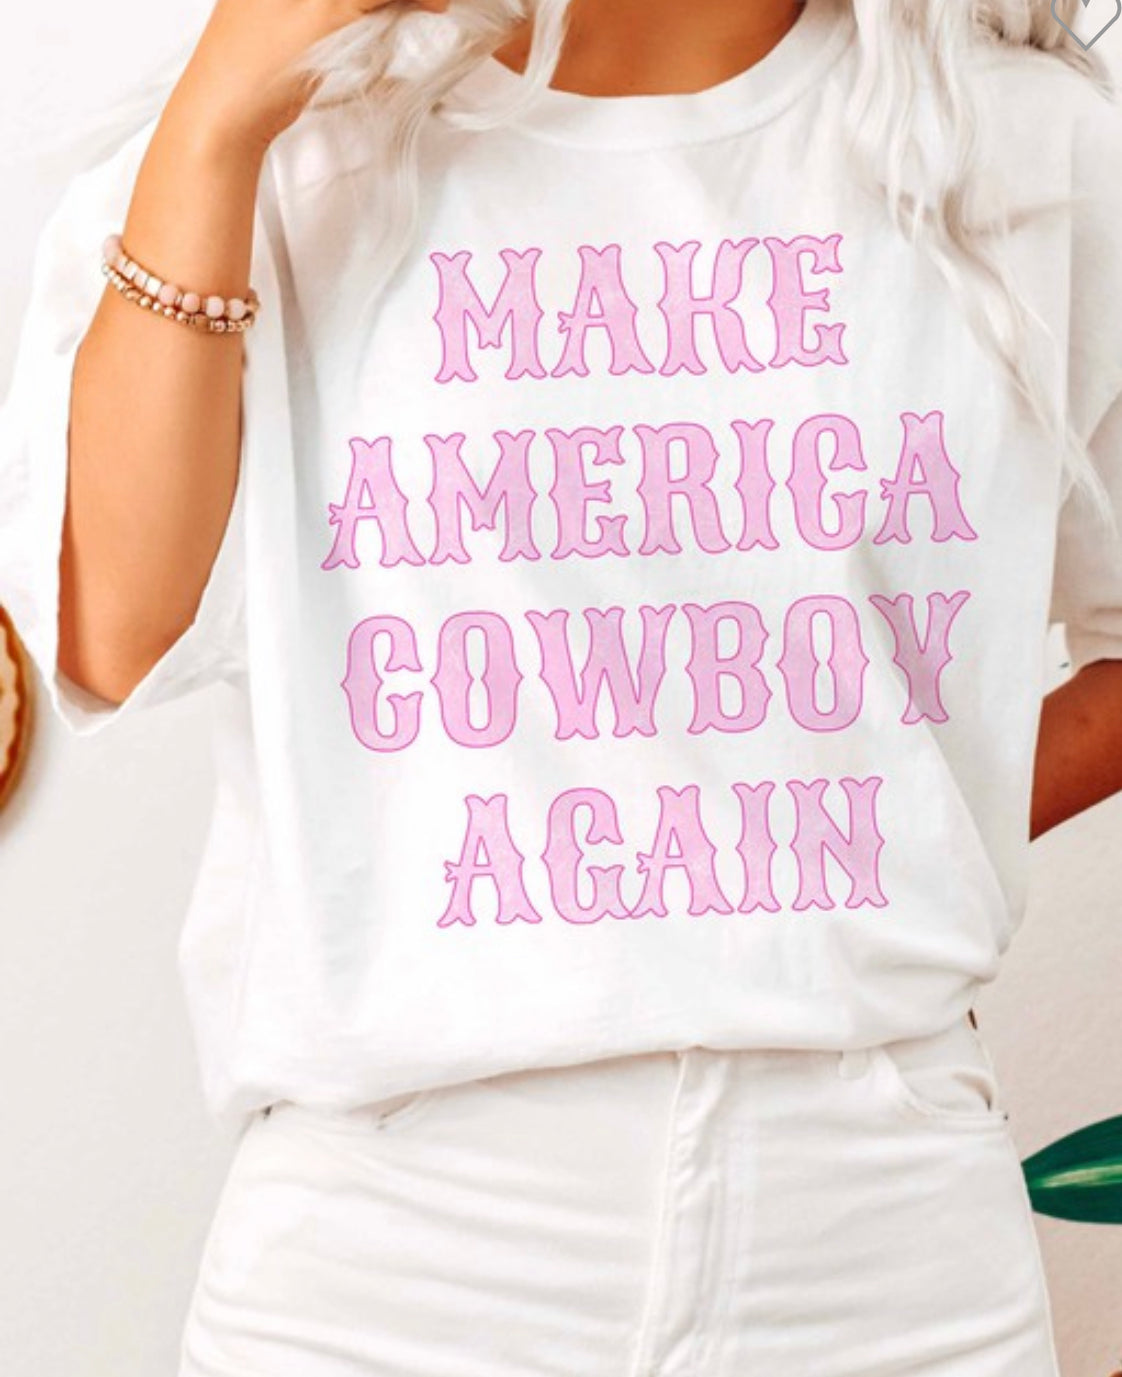 Make America Cowboy Tee